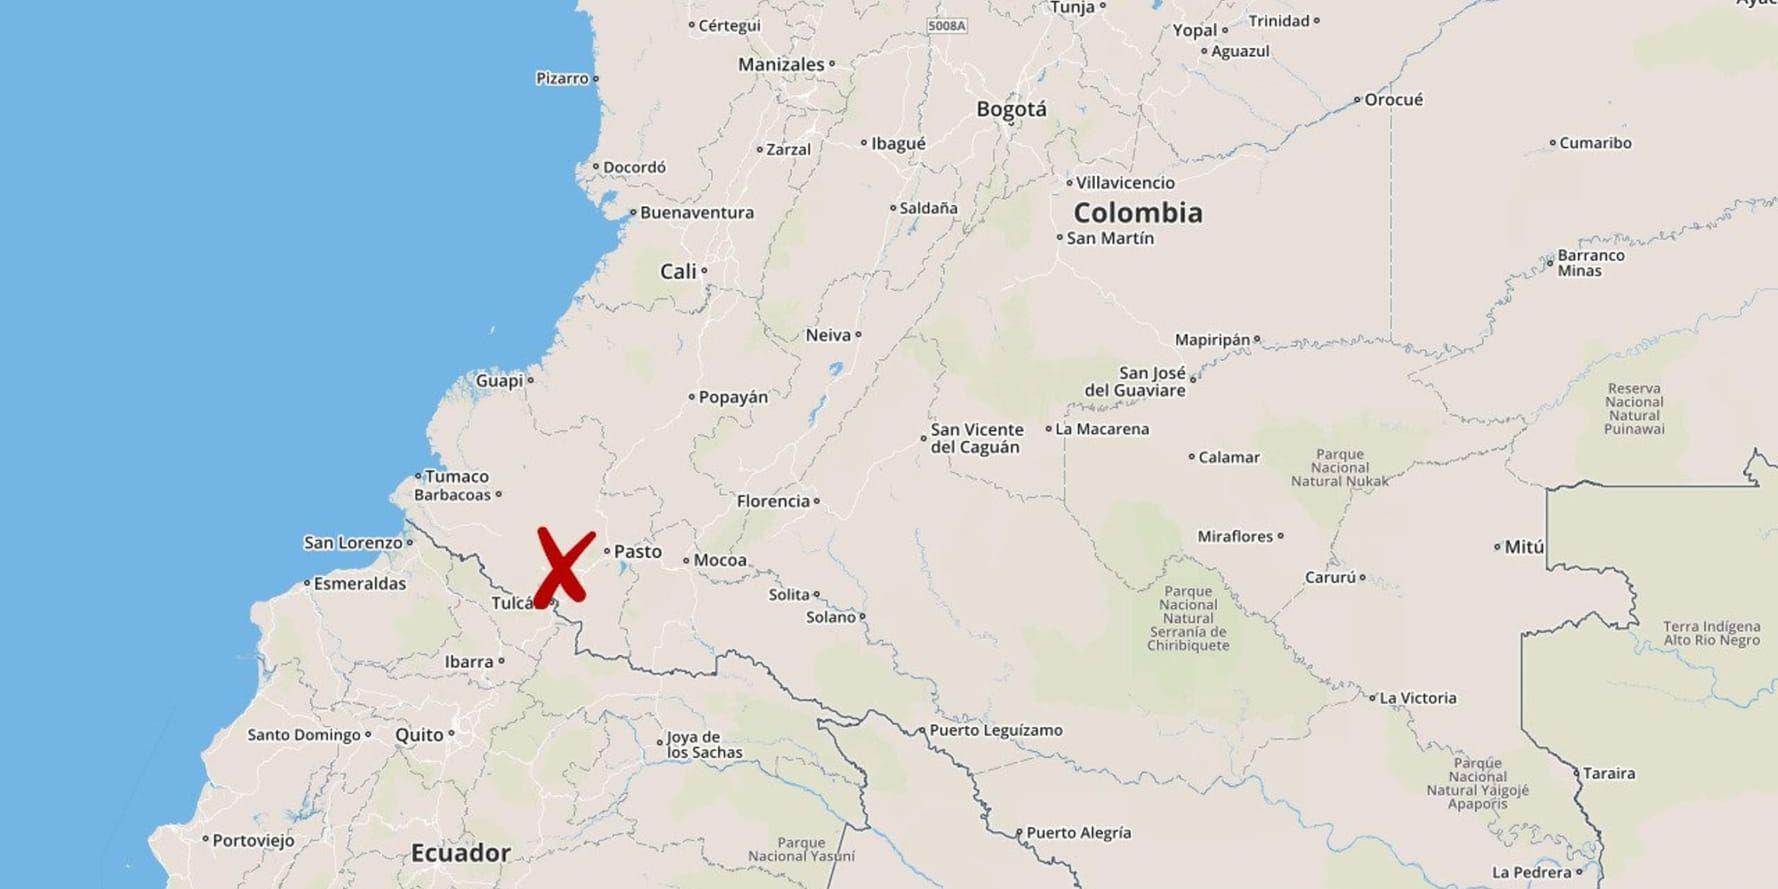 Minst 13 människor har omkommit i ett jordskred i Colombia.